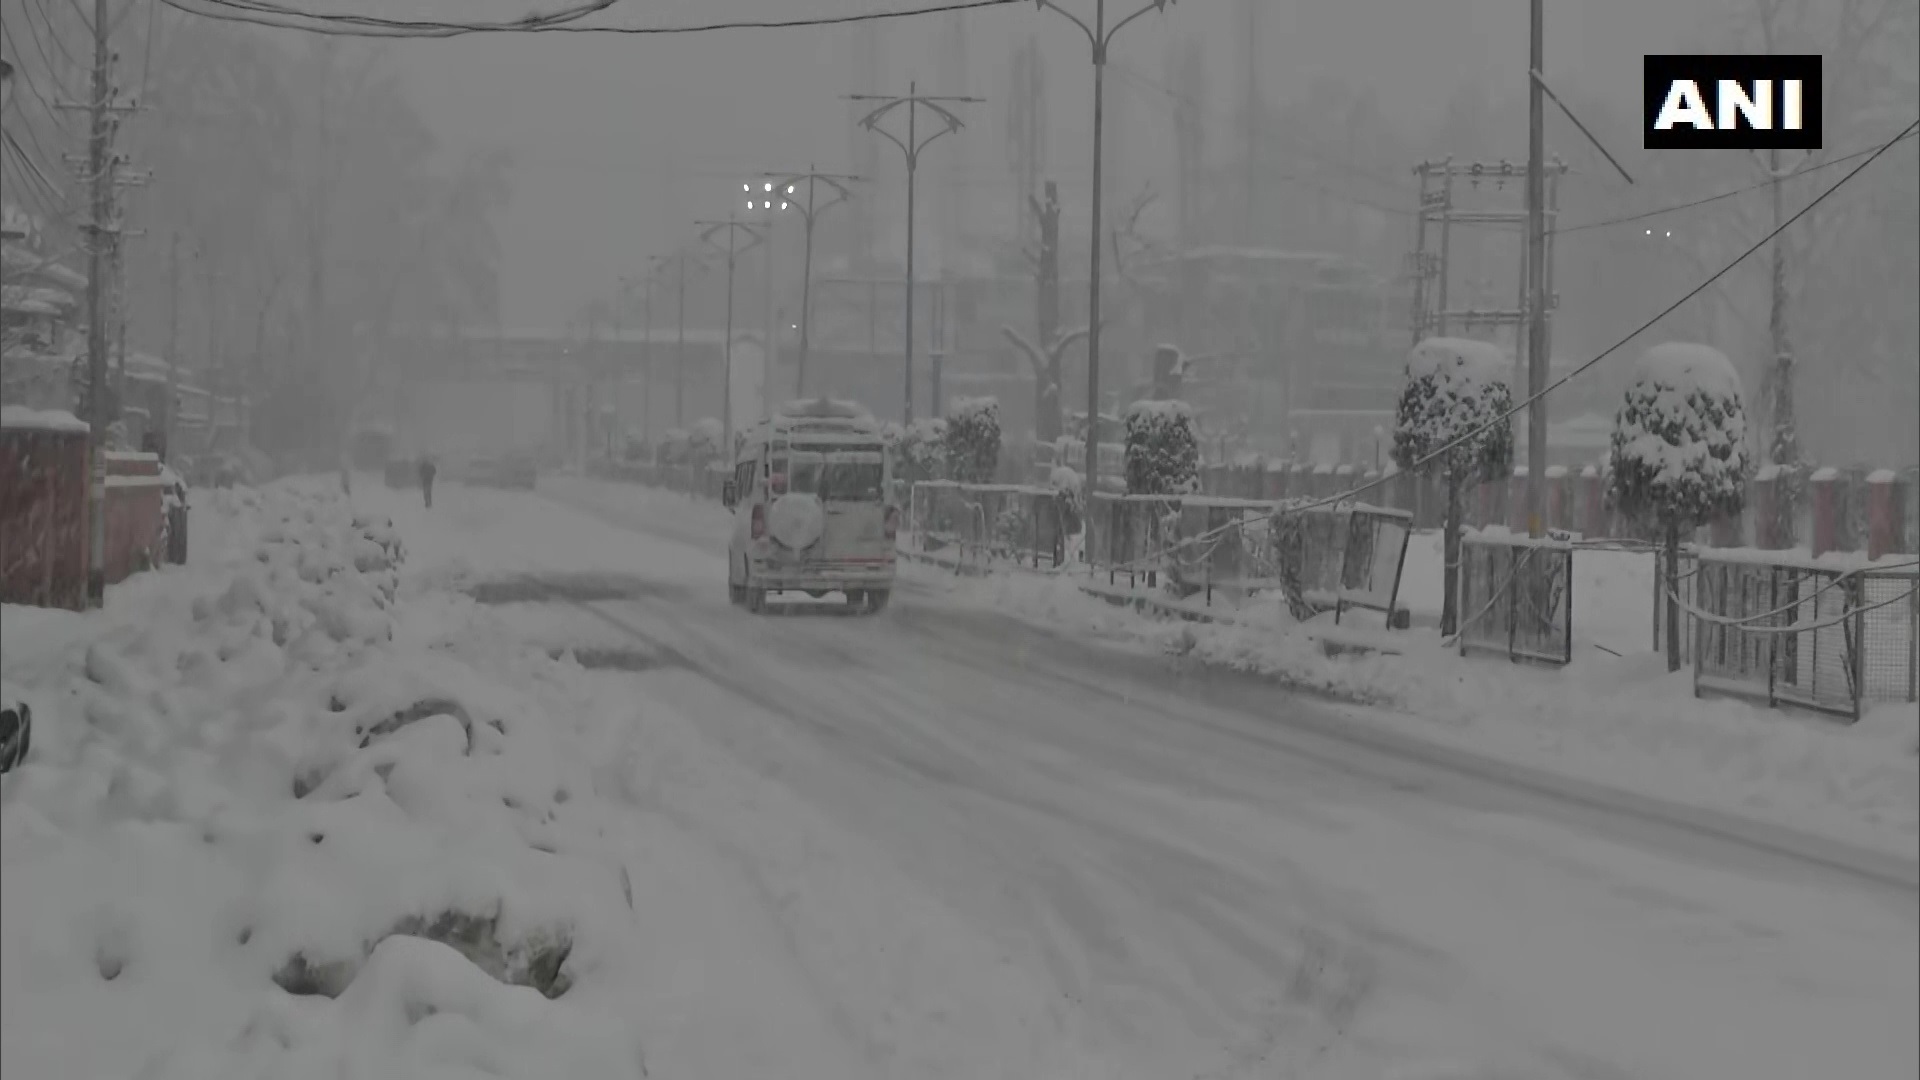 Srinagar received heavy snowfall today